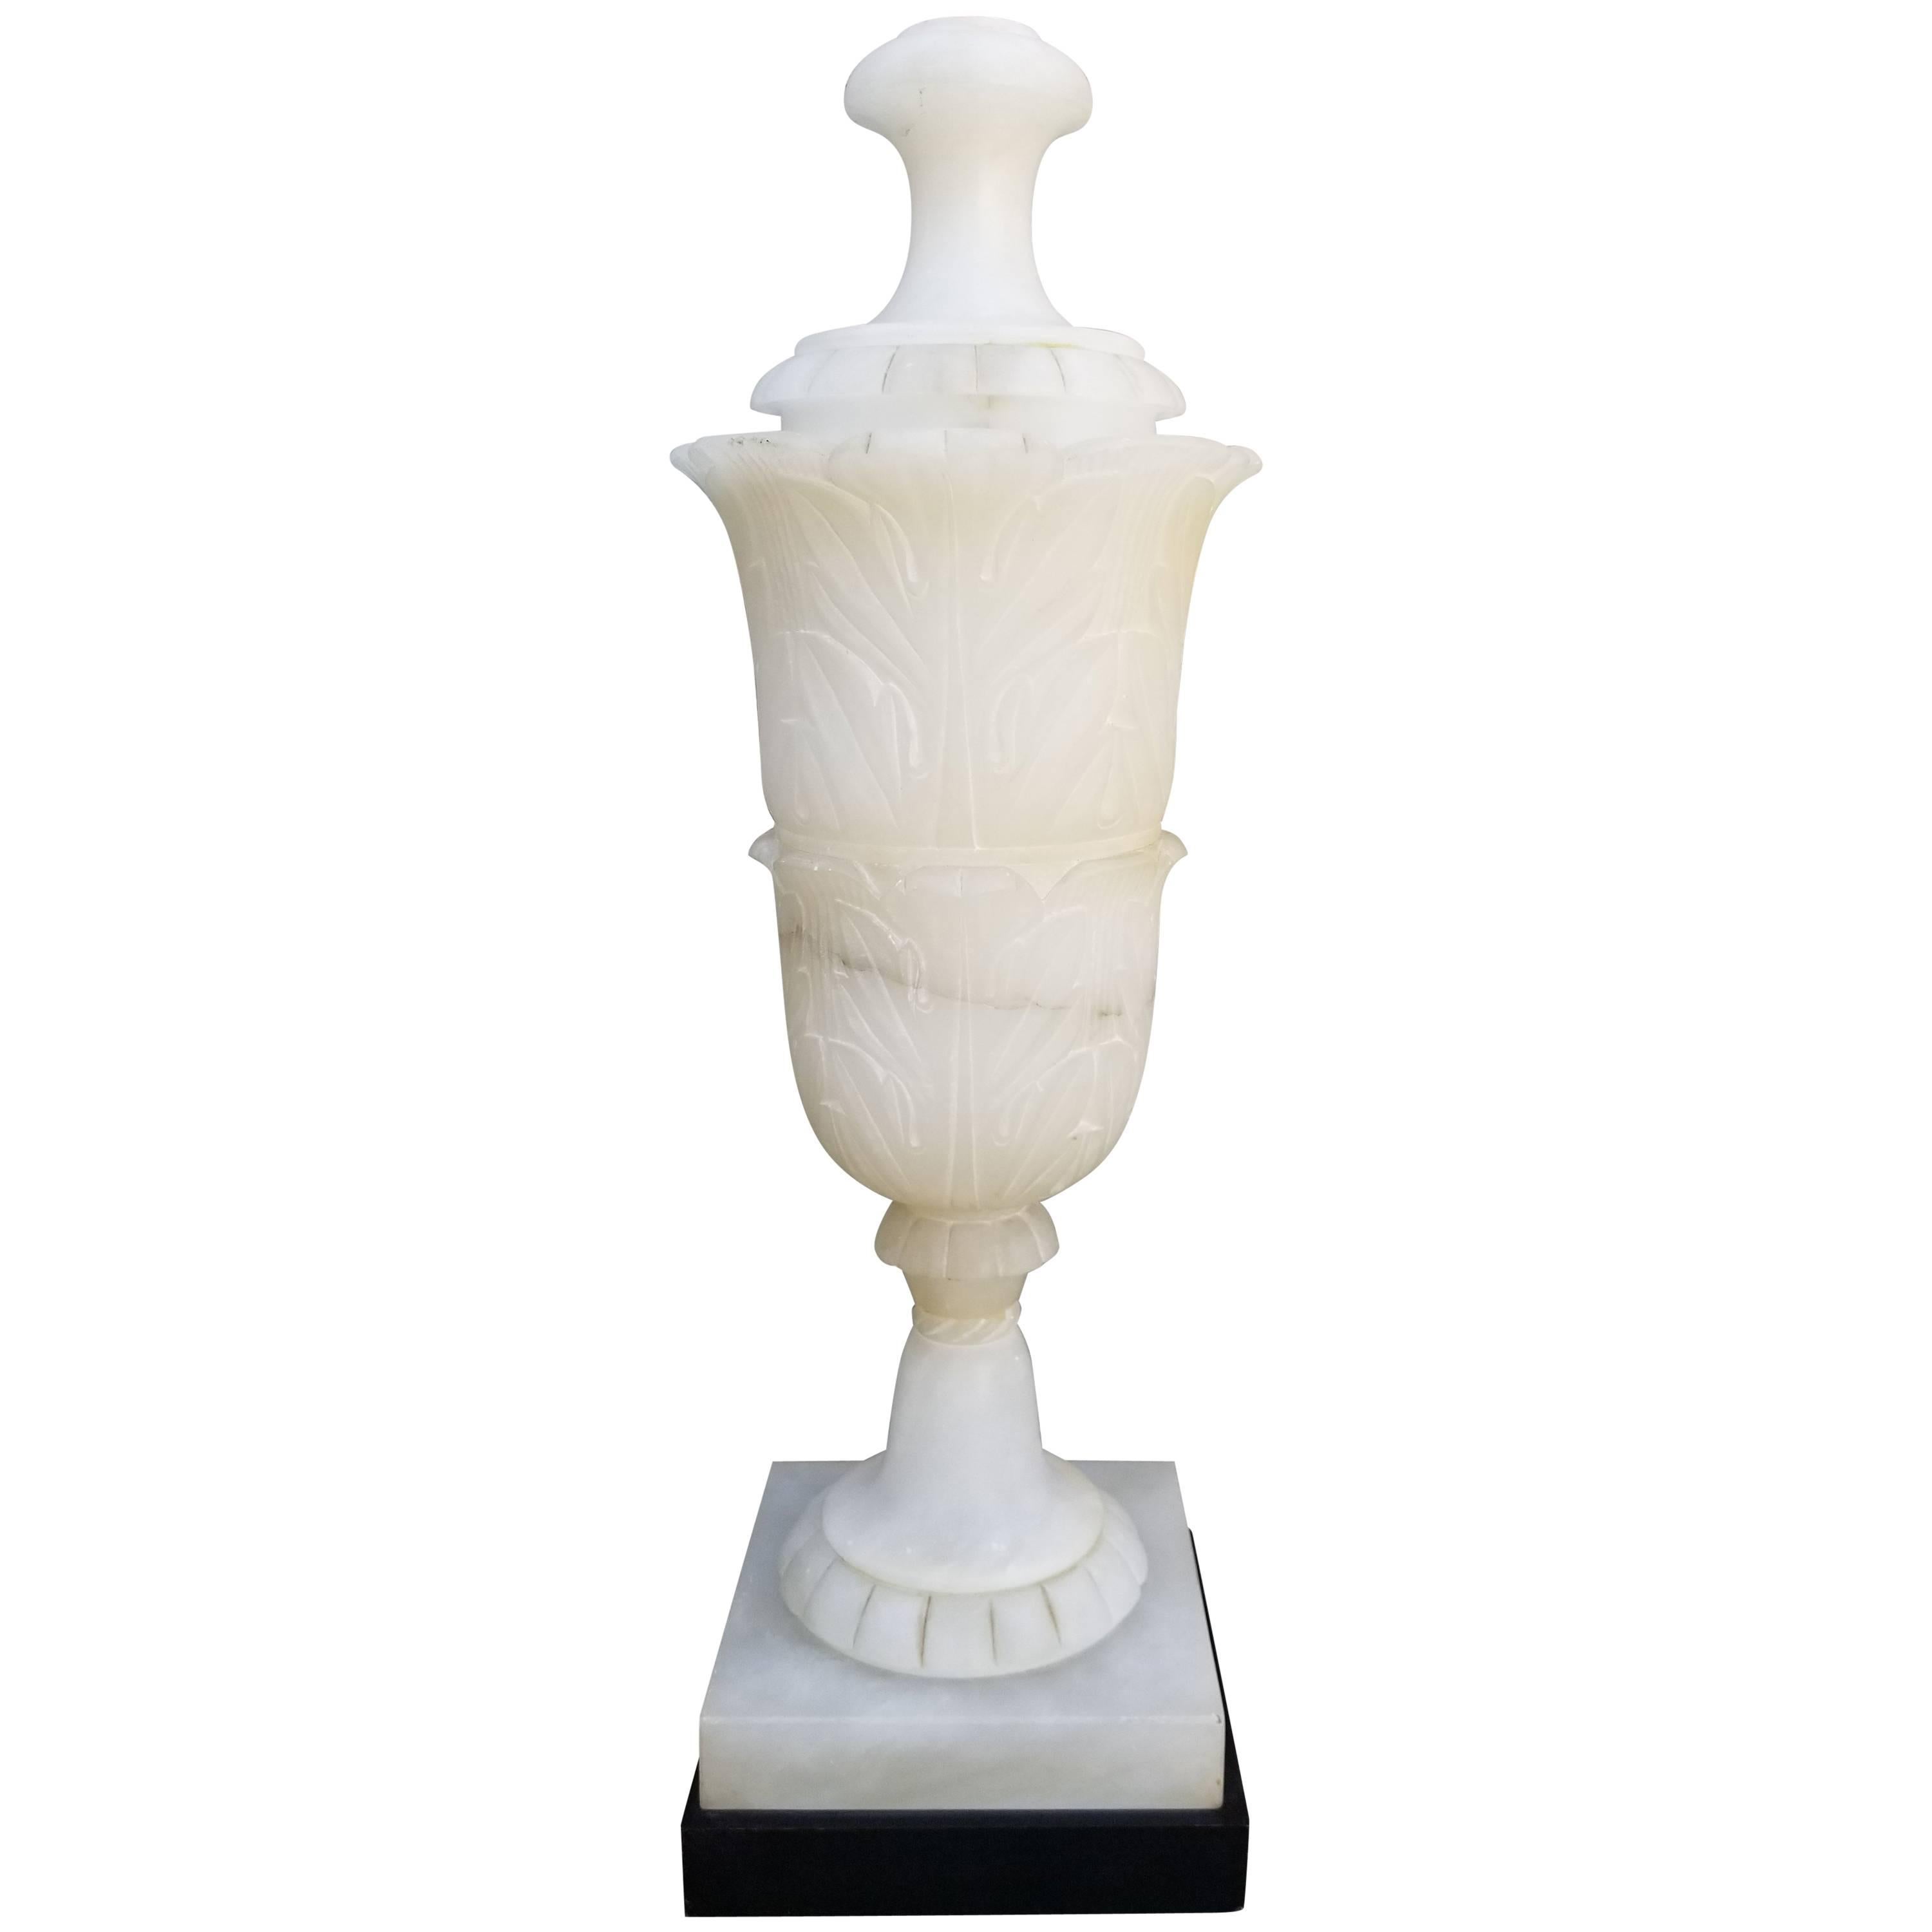 Monumental carved alabaster table lamp mounted to ebonized wood base. Alabaster urn measures 25